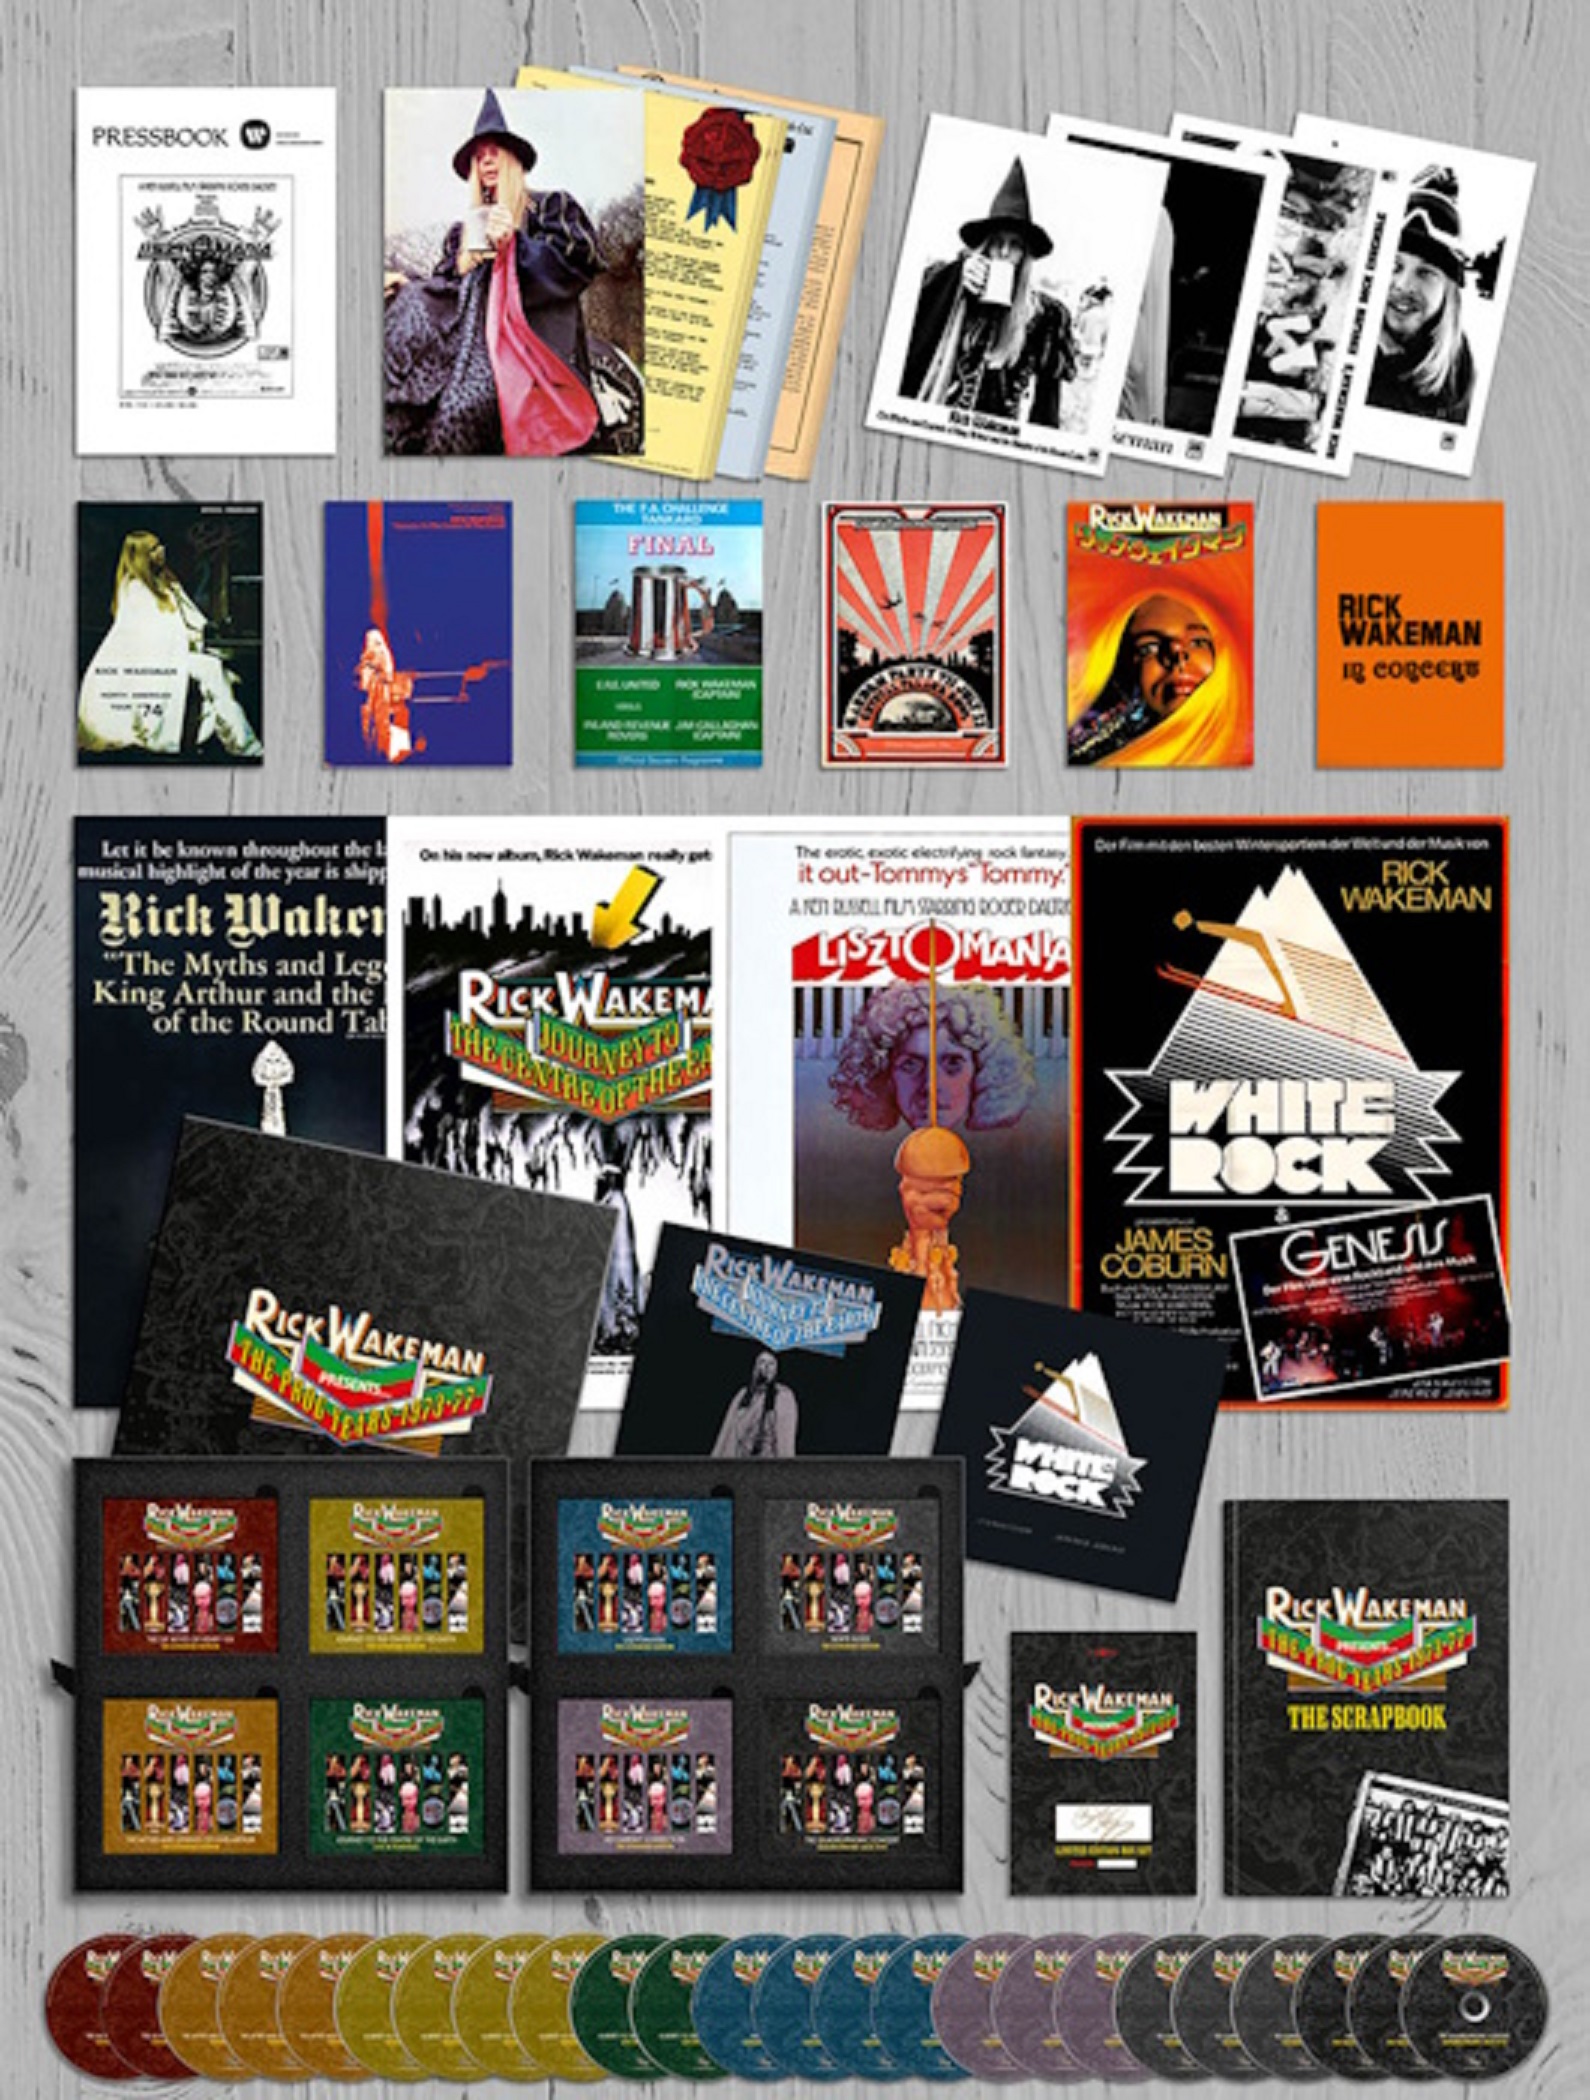 Rick Wakeman “The Prog Years 1973-1977” CD/DVD Box Set Now Available!